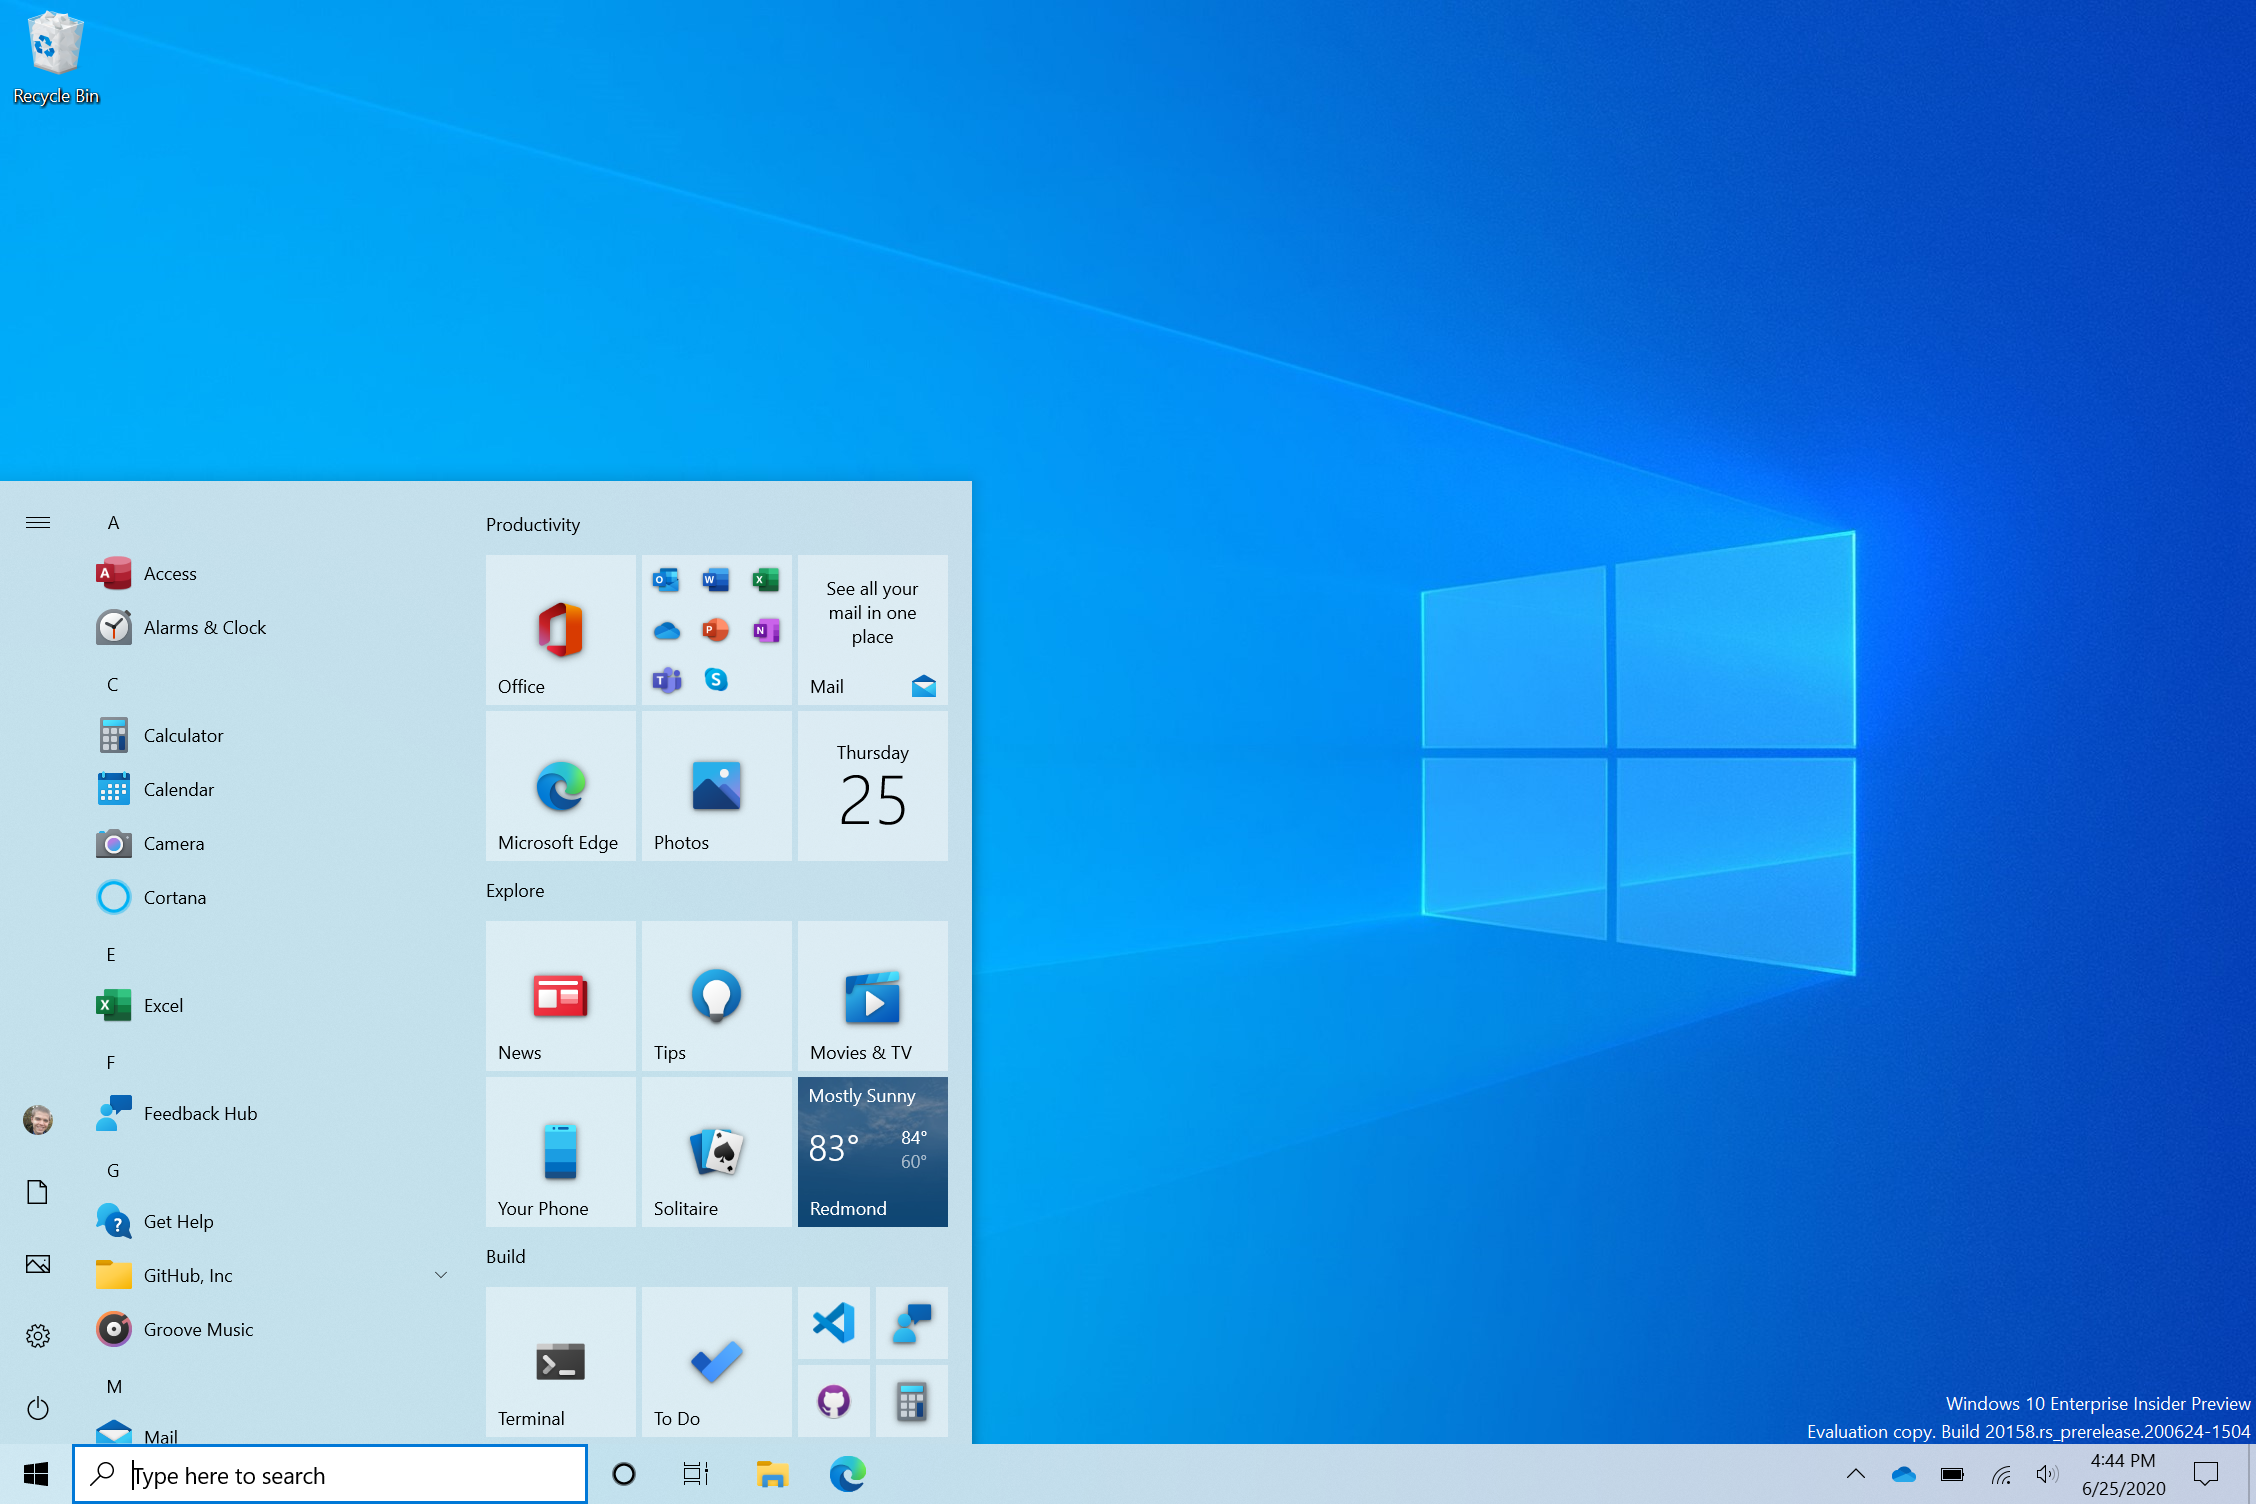 Windows 10 Start menu in light theme.